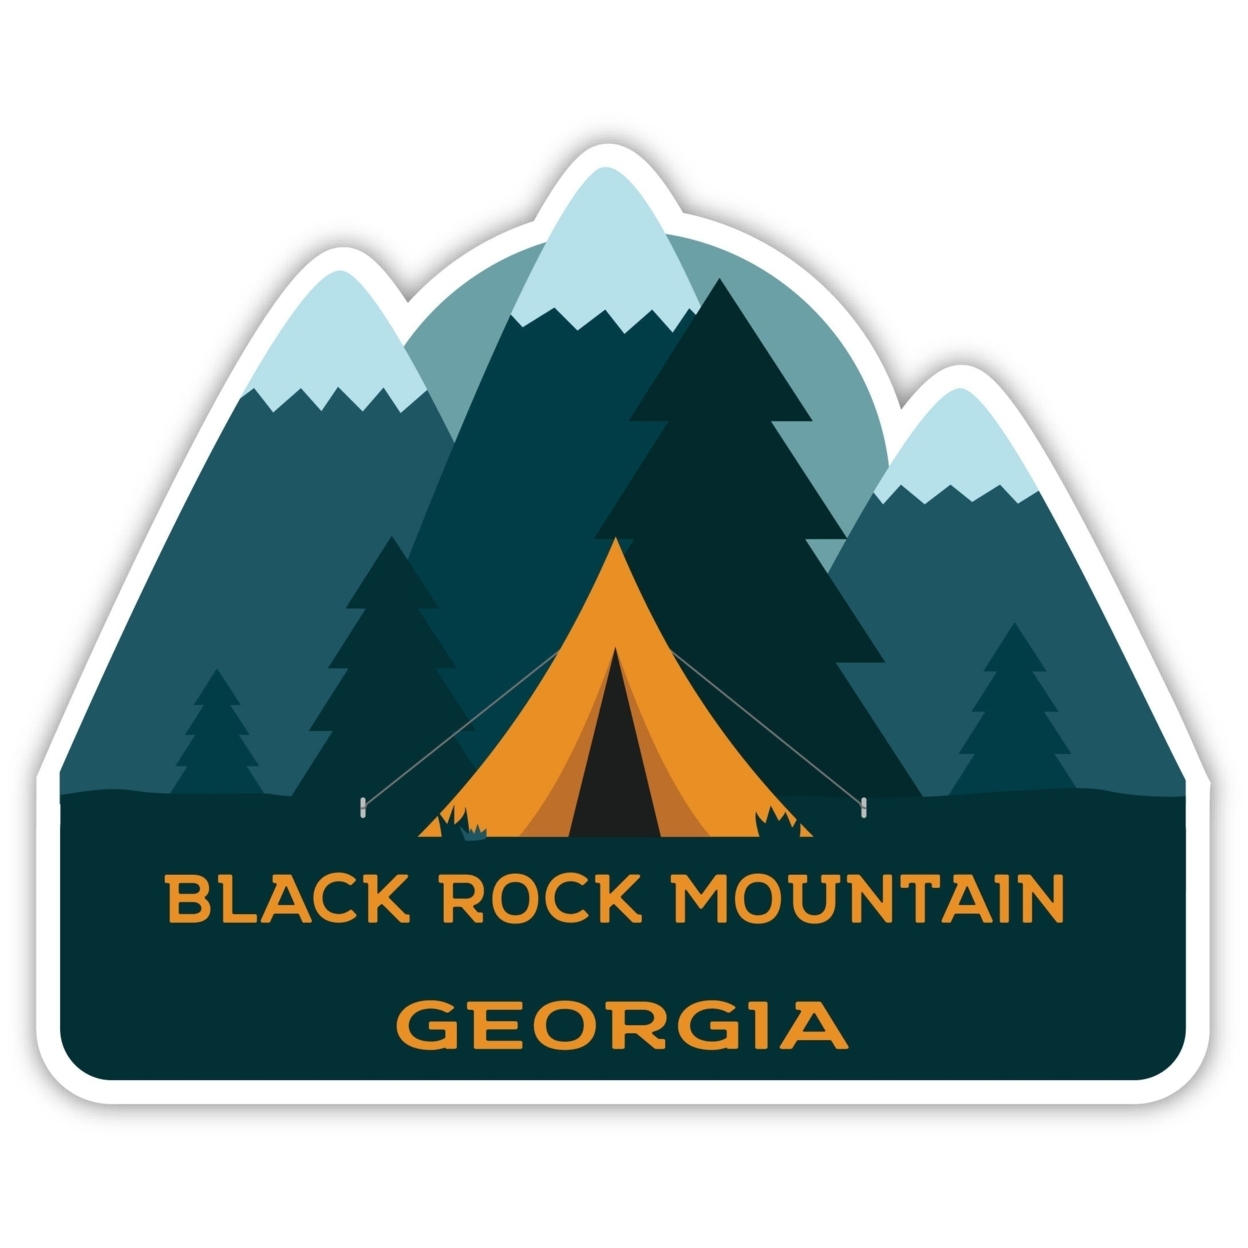 Black Rock Mountain Georgia Souvenir Decorative Stickers (Choose Theme And Size) - 4-Pack, 4-Inch, Tent